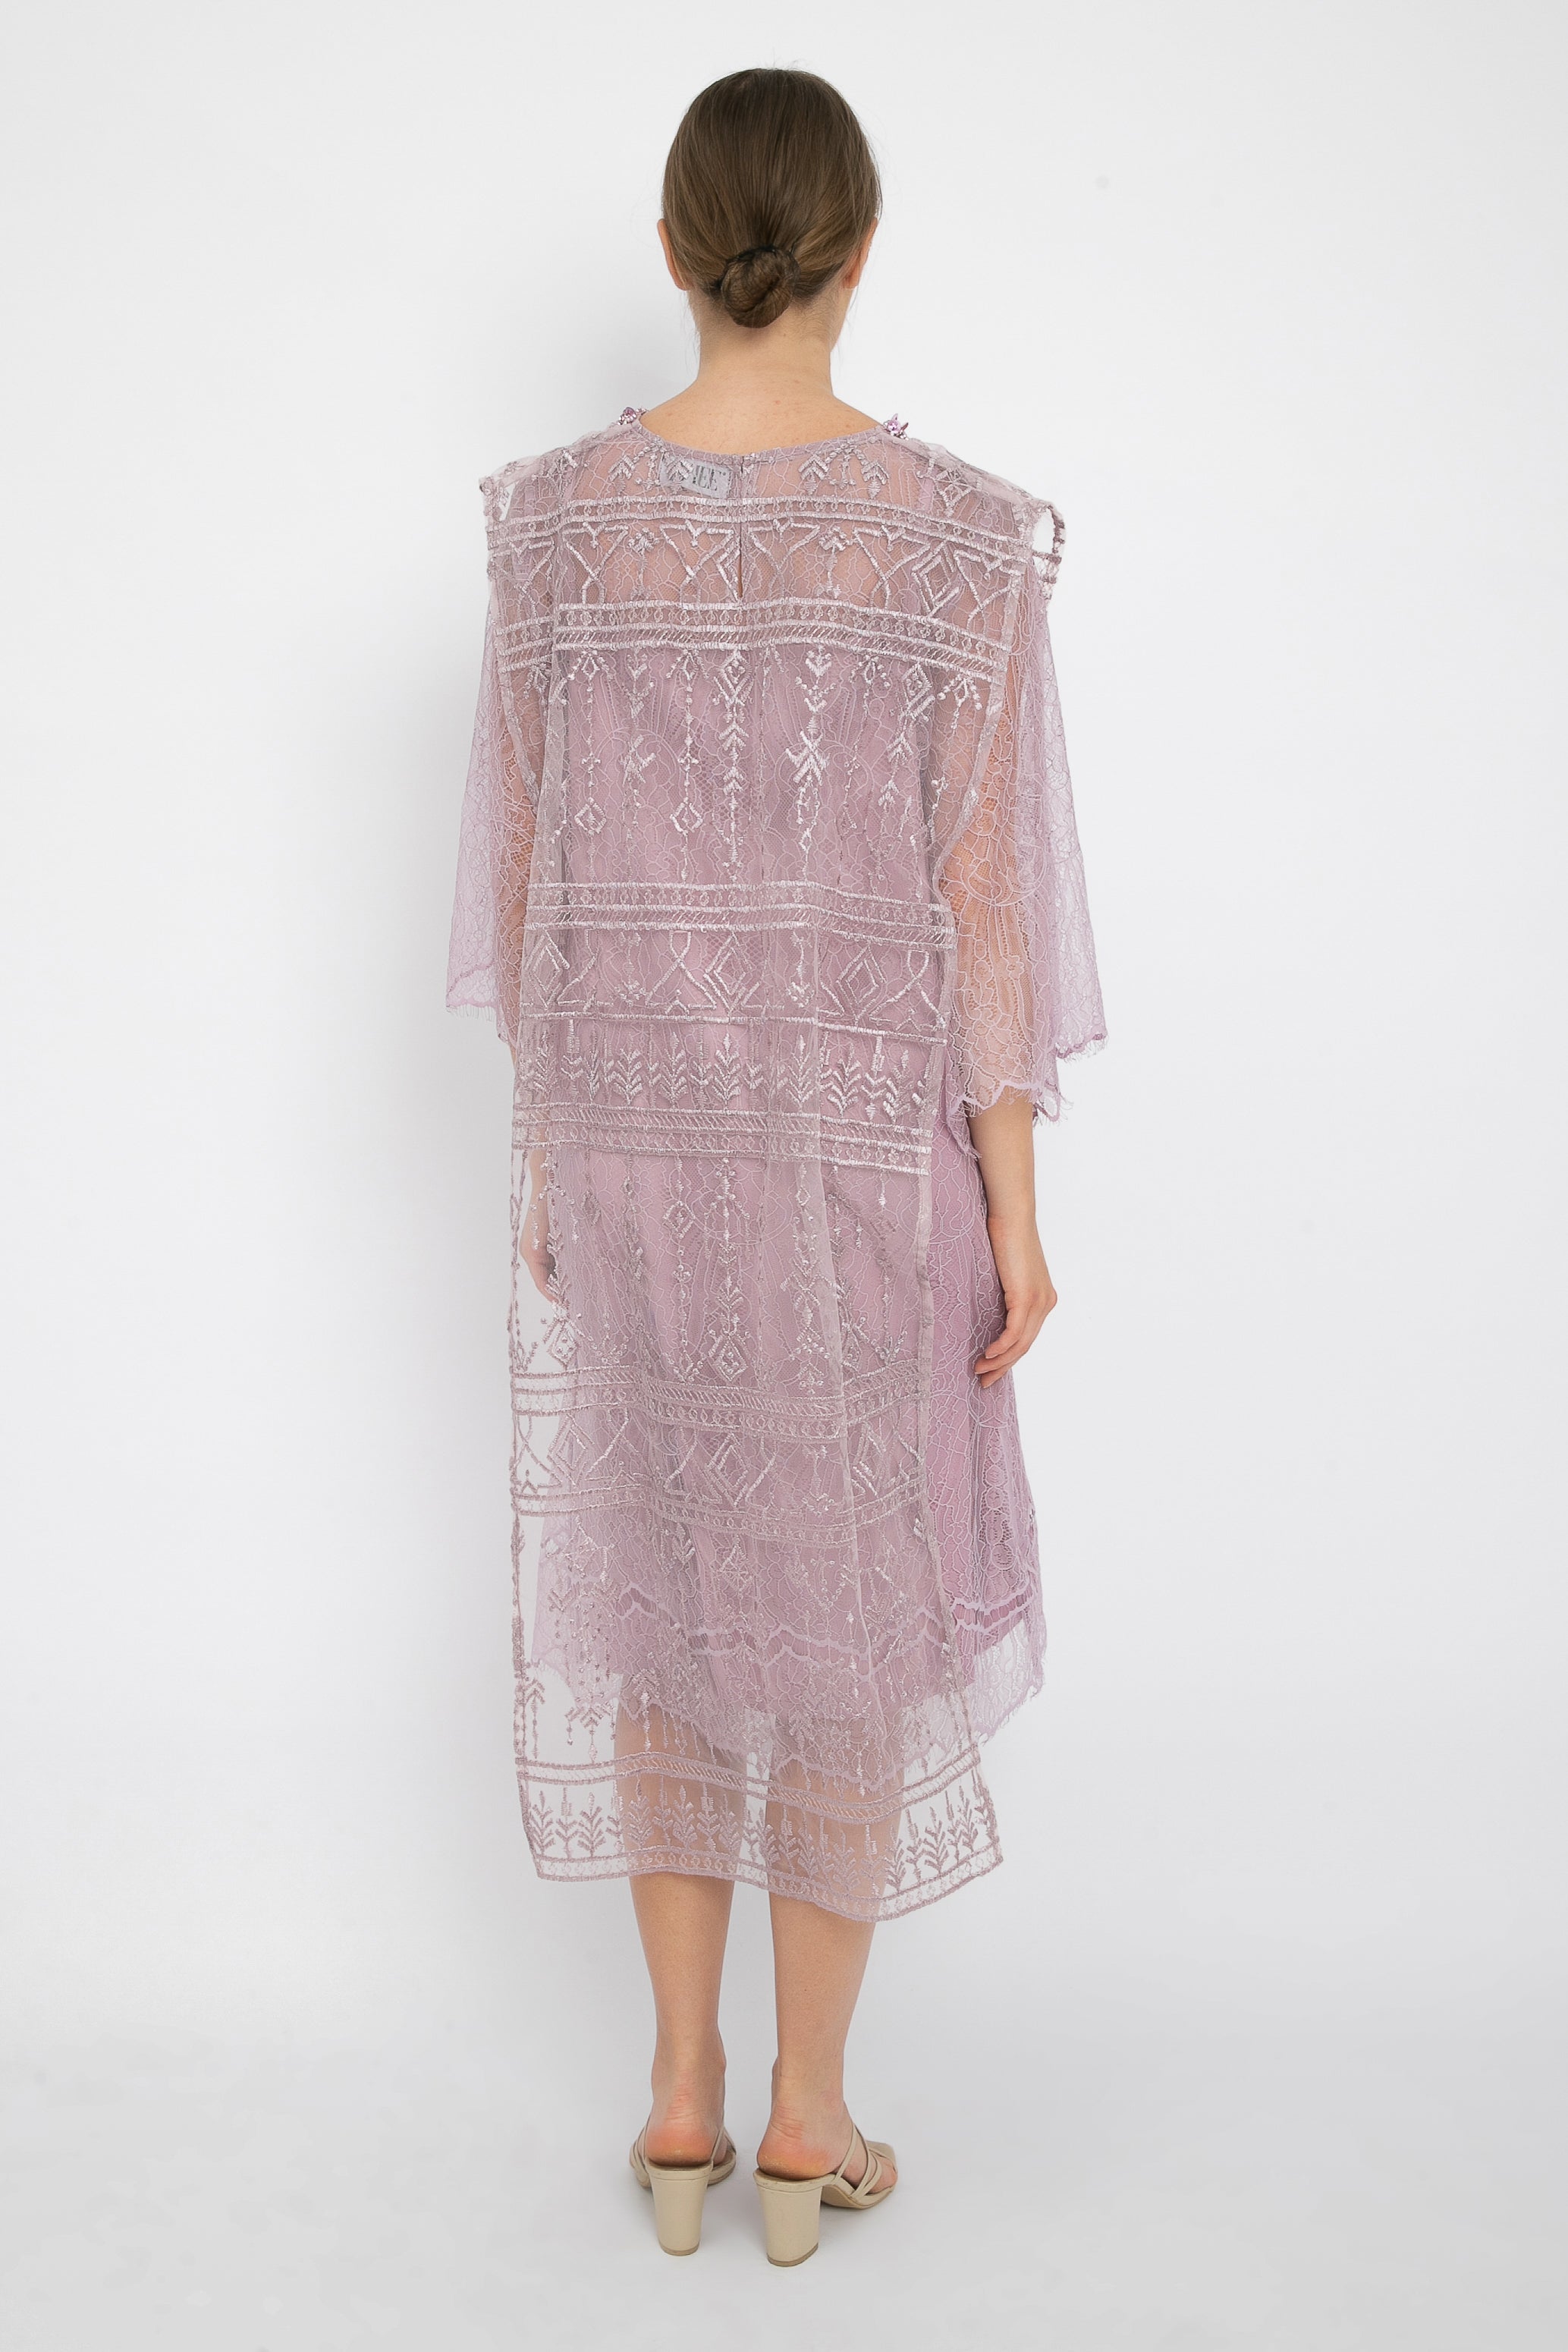 Arimbi Dress in Lilac